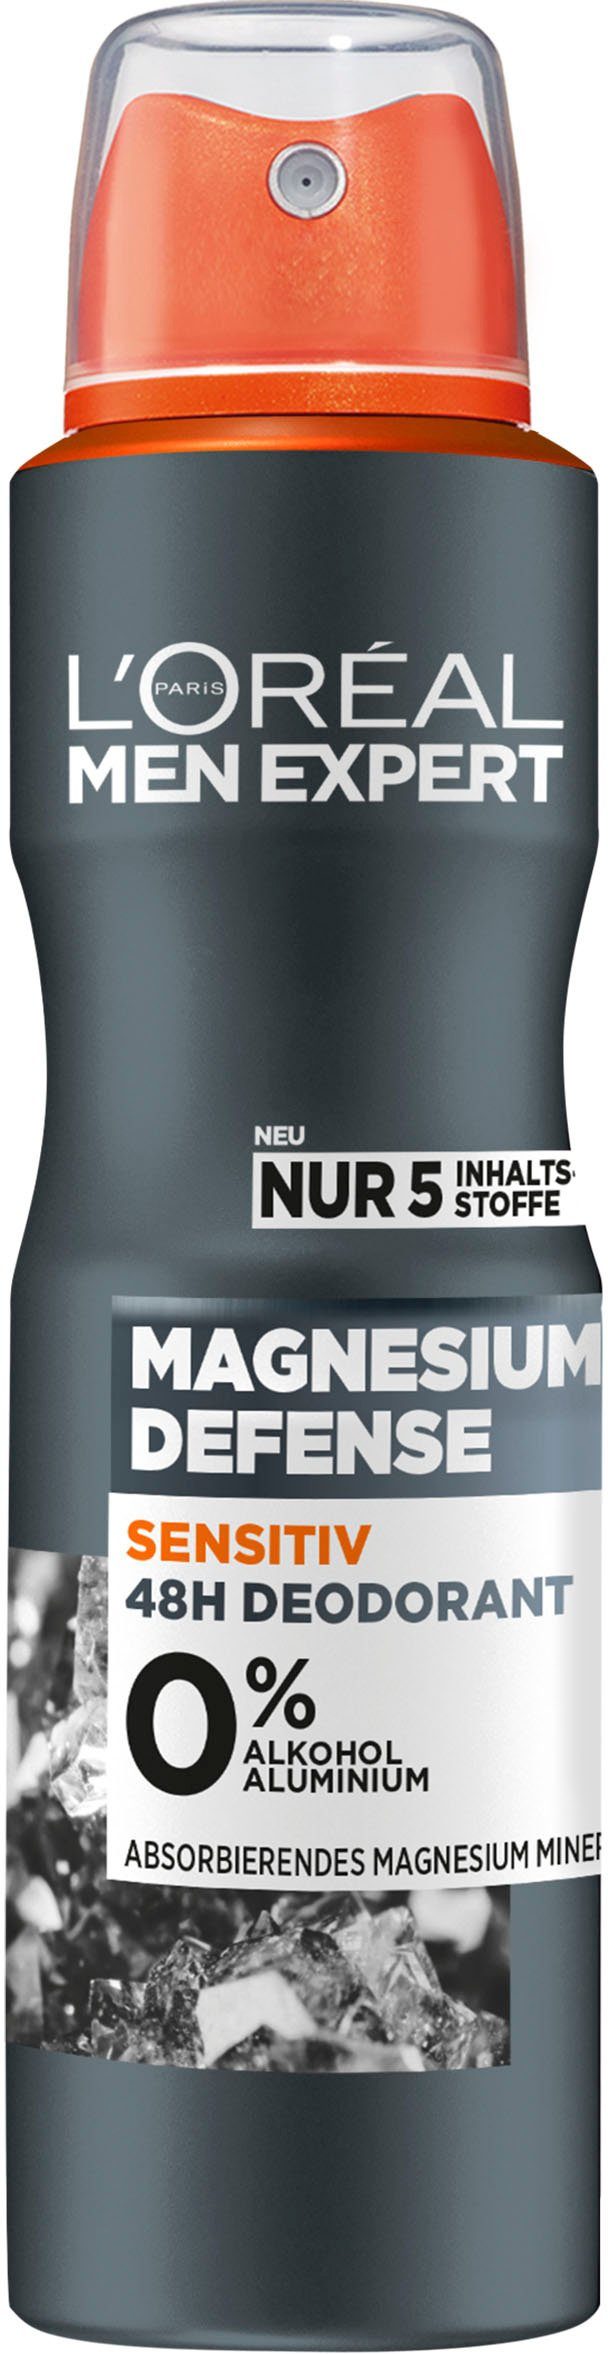 MEN Magnesium L'ORÉAL EXPERT Defense PARIS Deo-Spray